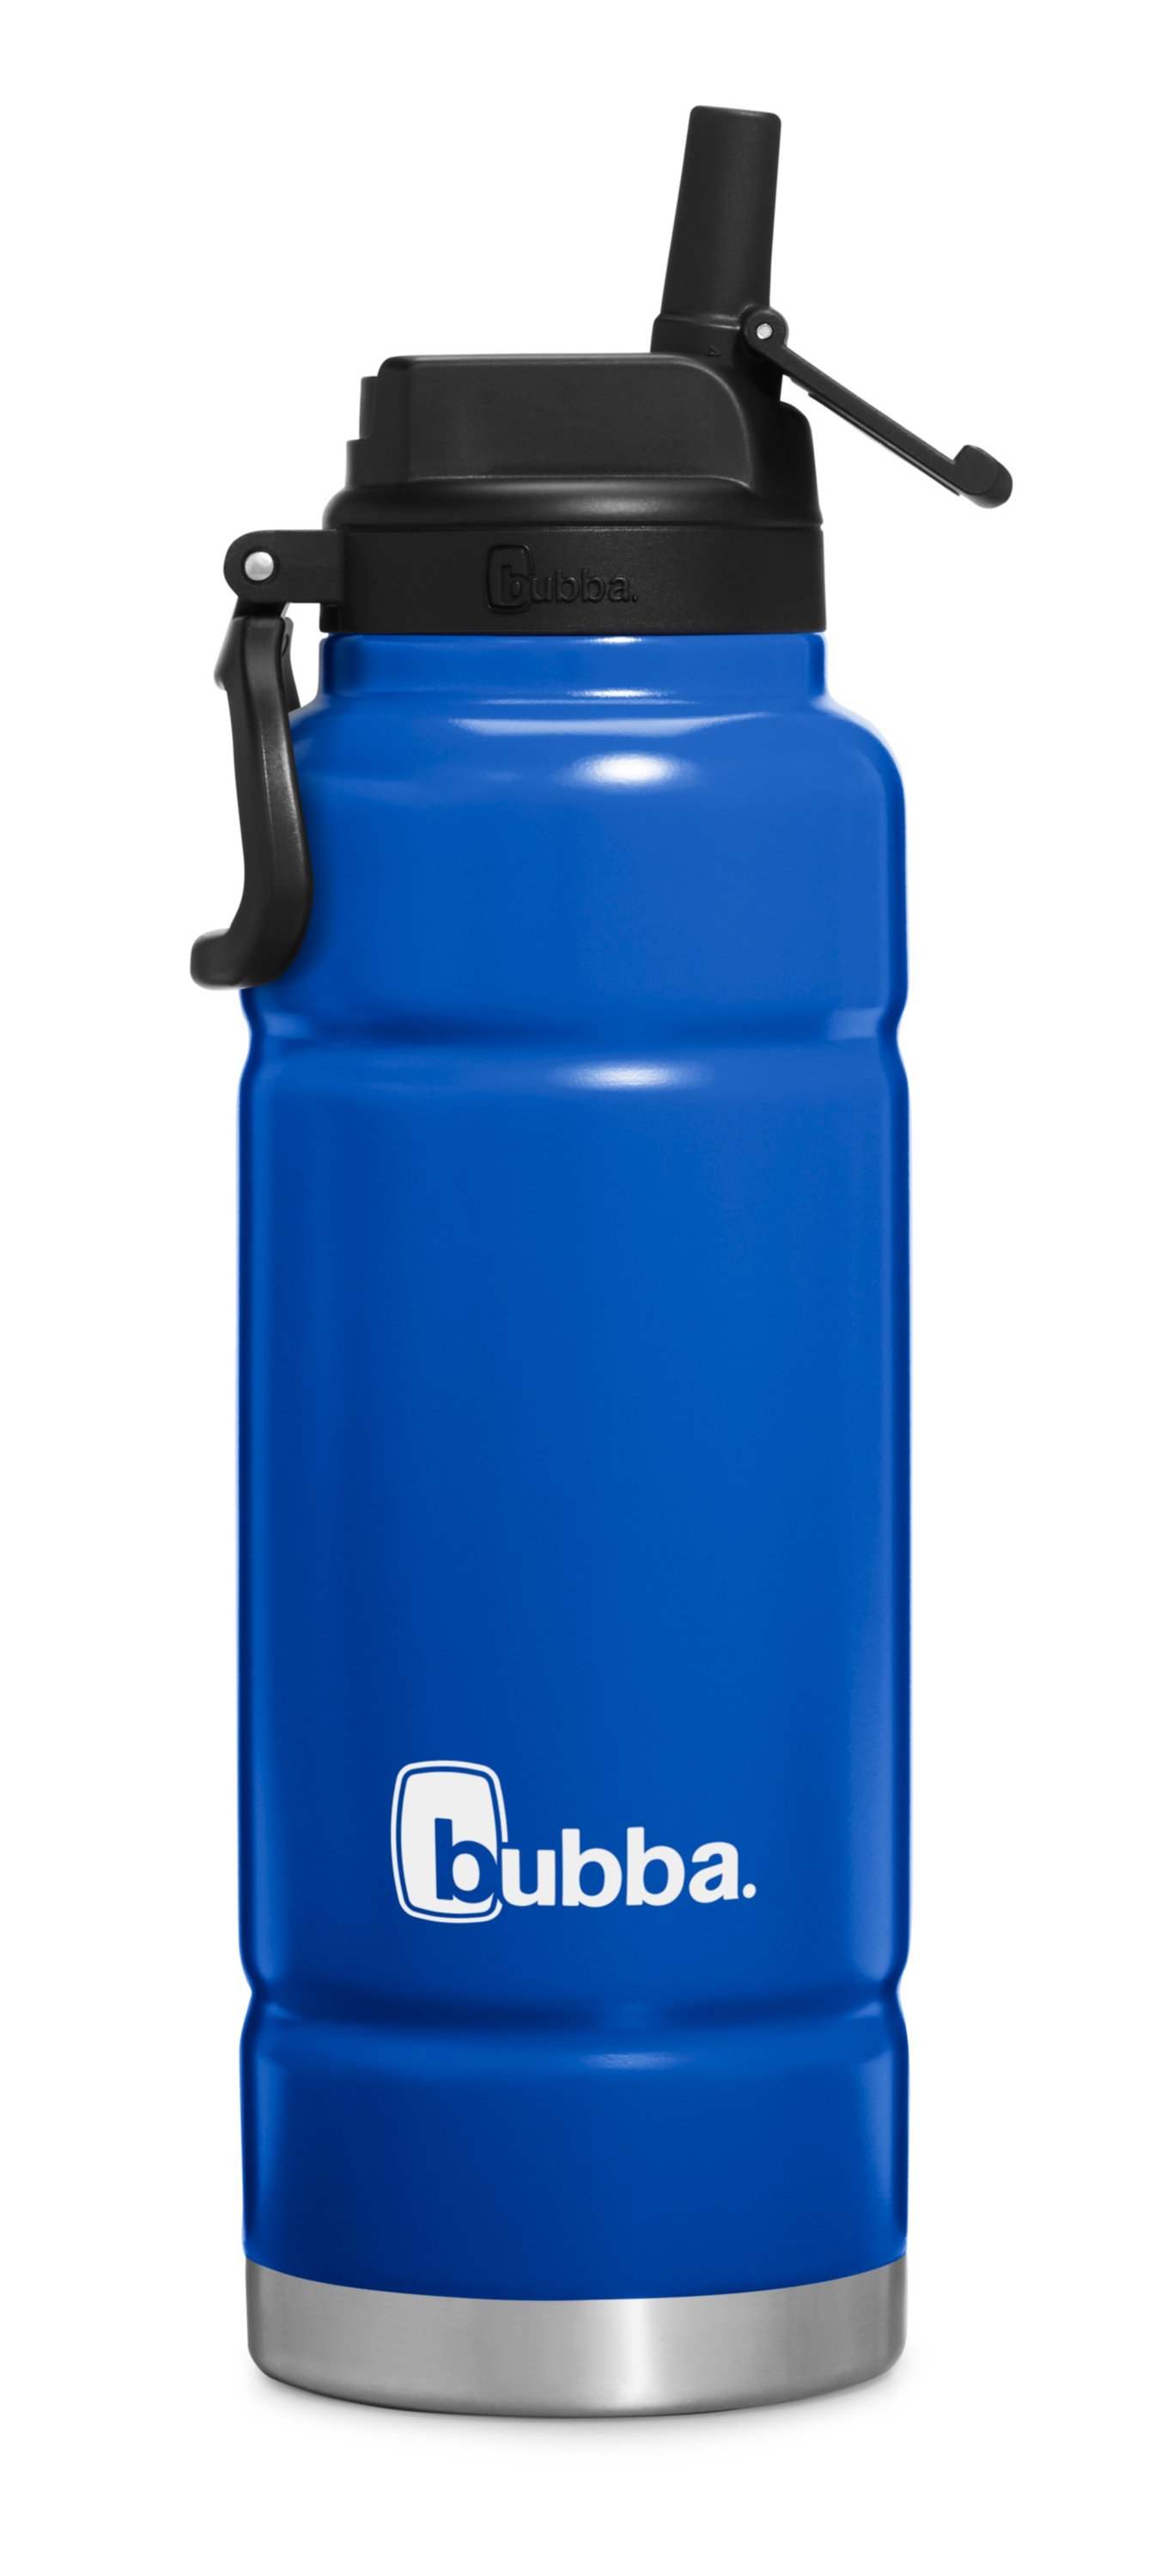 bubba Trailblazer Stainless Steel Water Bottle Straw Lid Very Berry Blue, 40  fl oz. 